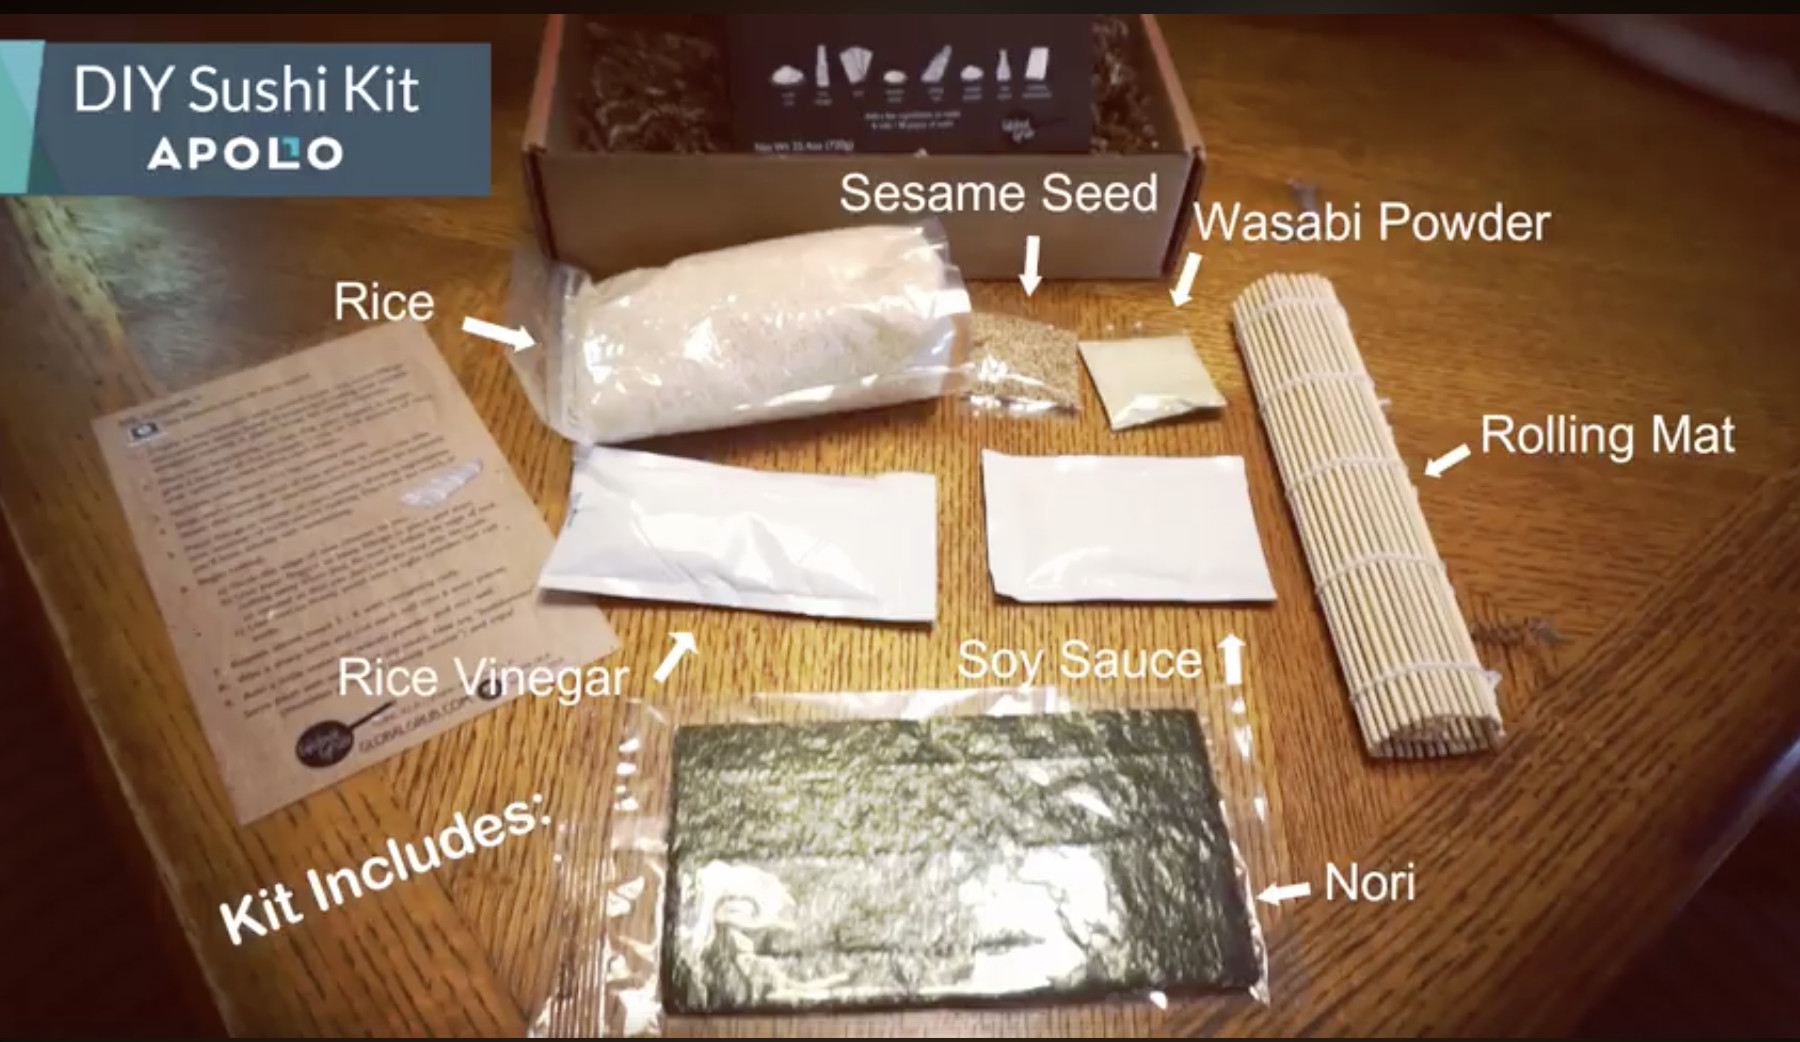 Best ideas about DIY Sushi Kit
. Save or Pin DIY Sushi Kit Make Your Own Sushi Rolls Apollo Box Blog Now.